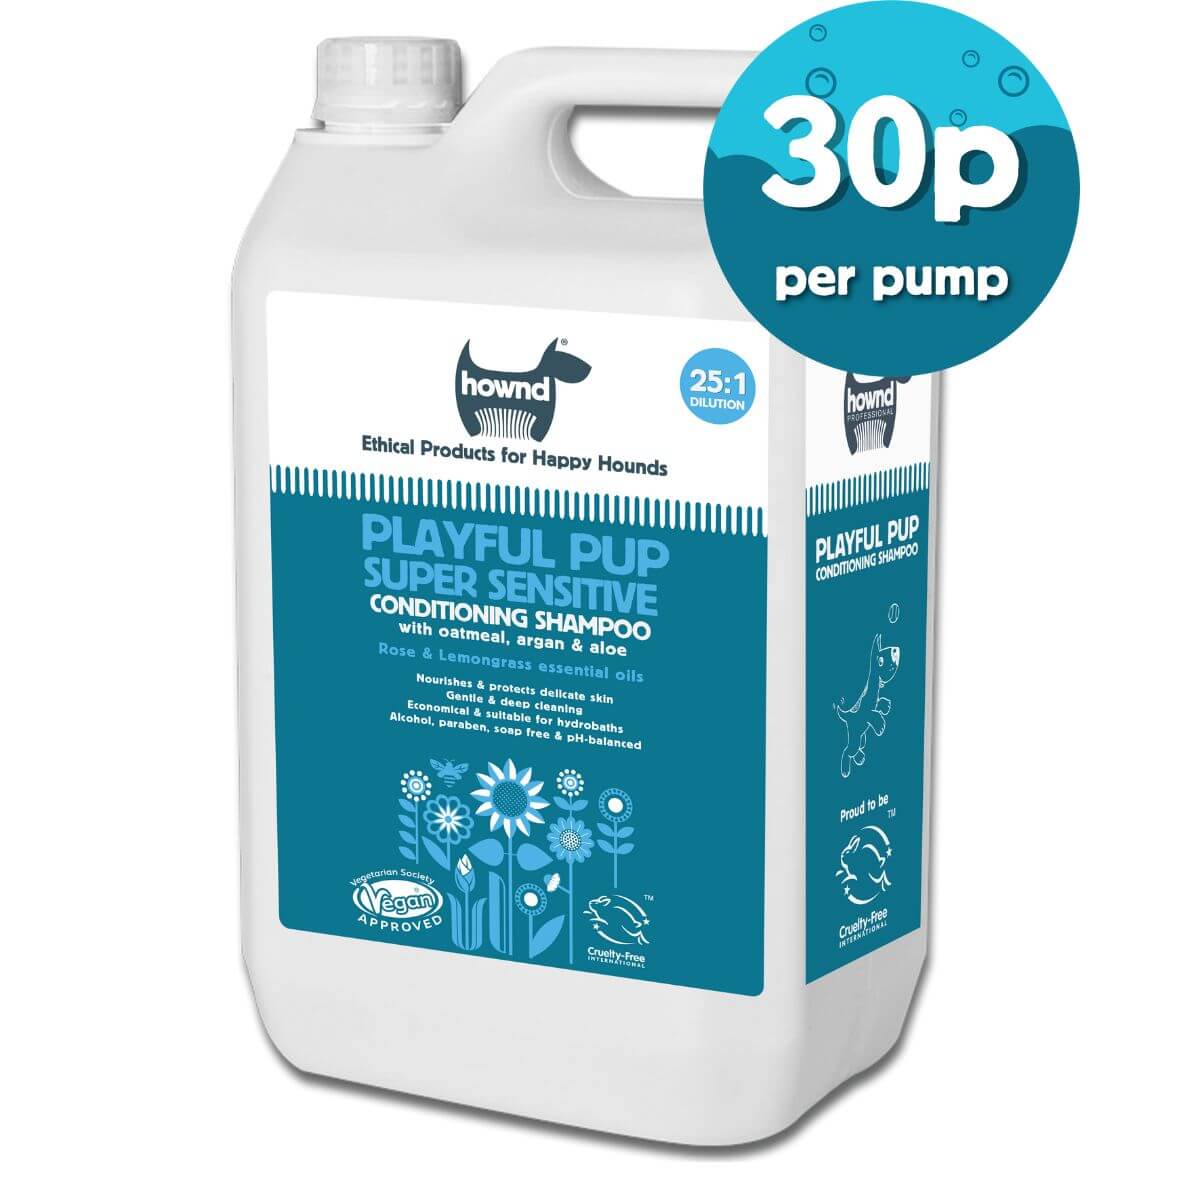 25:1 Professional Playful Pup Super Sensitive Conditioning Shampoo 5L - Hownd, price per pump